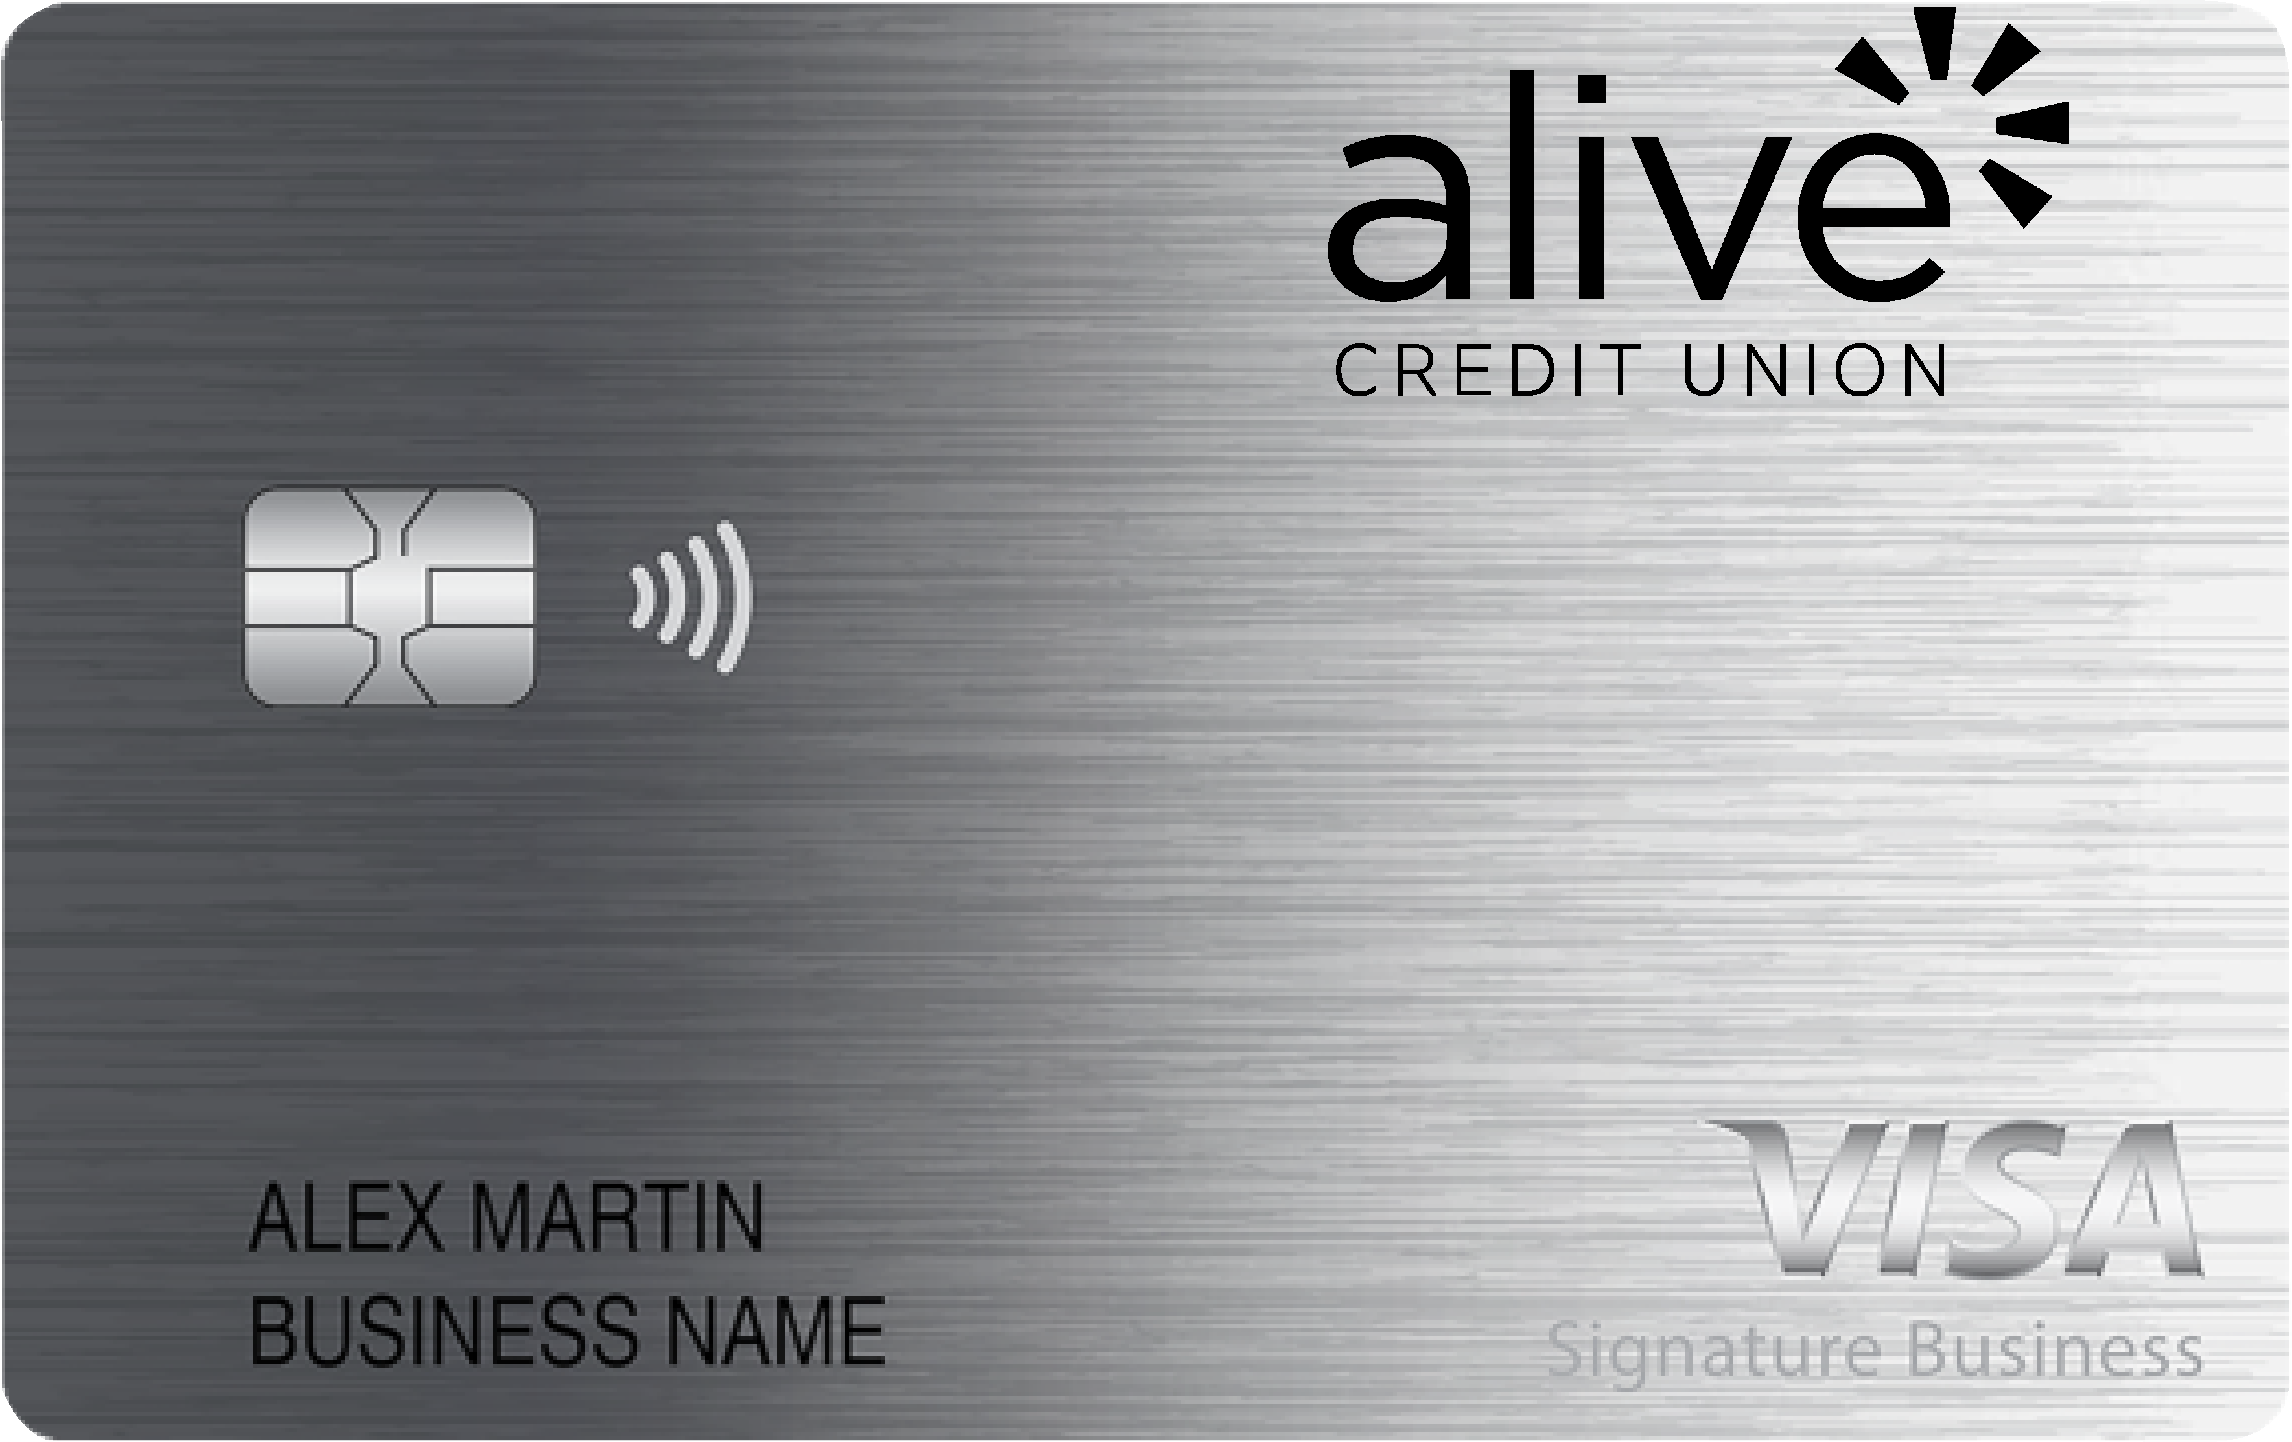 Alive Credit Union Smart Business Rewards Card